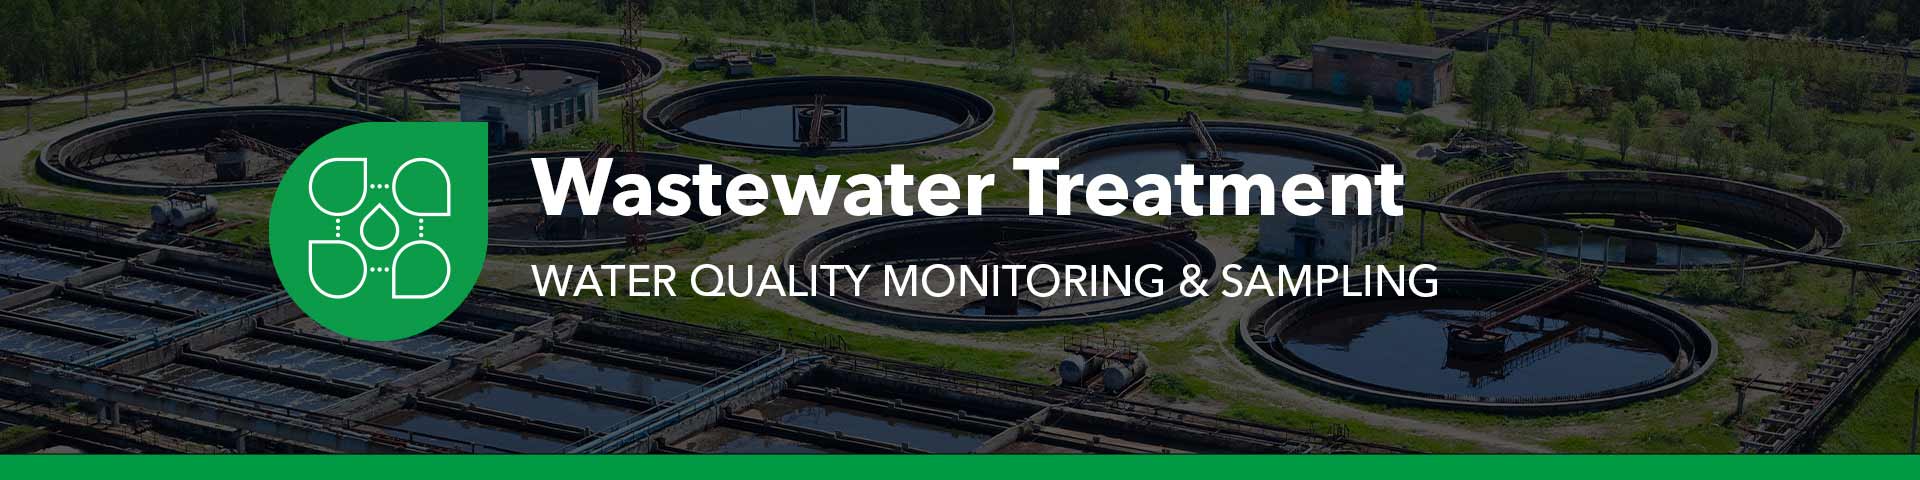 wastewater treatment water quality monitoring sampling